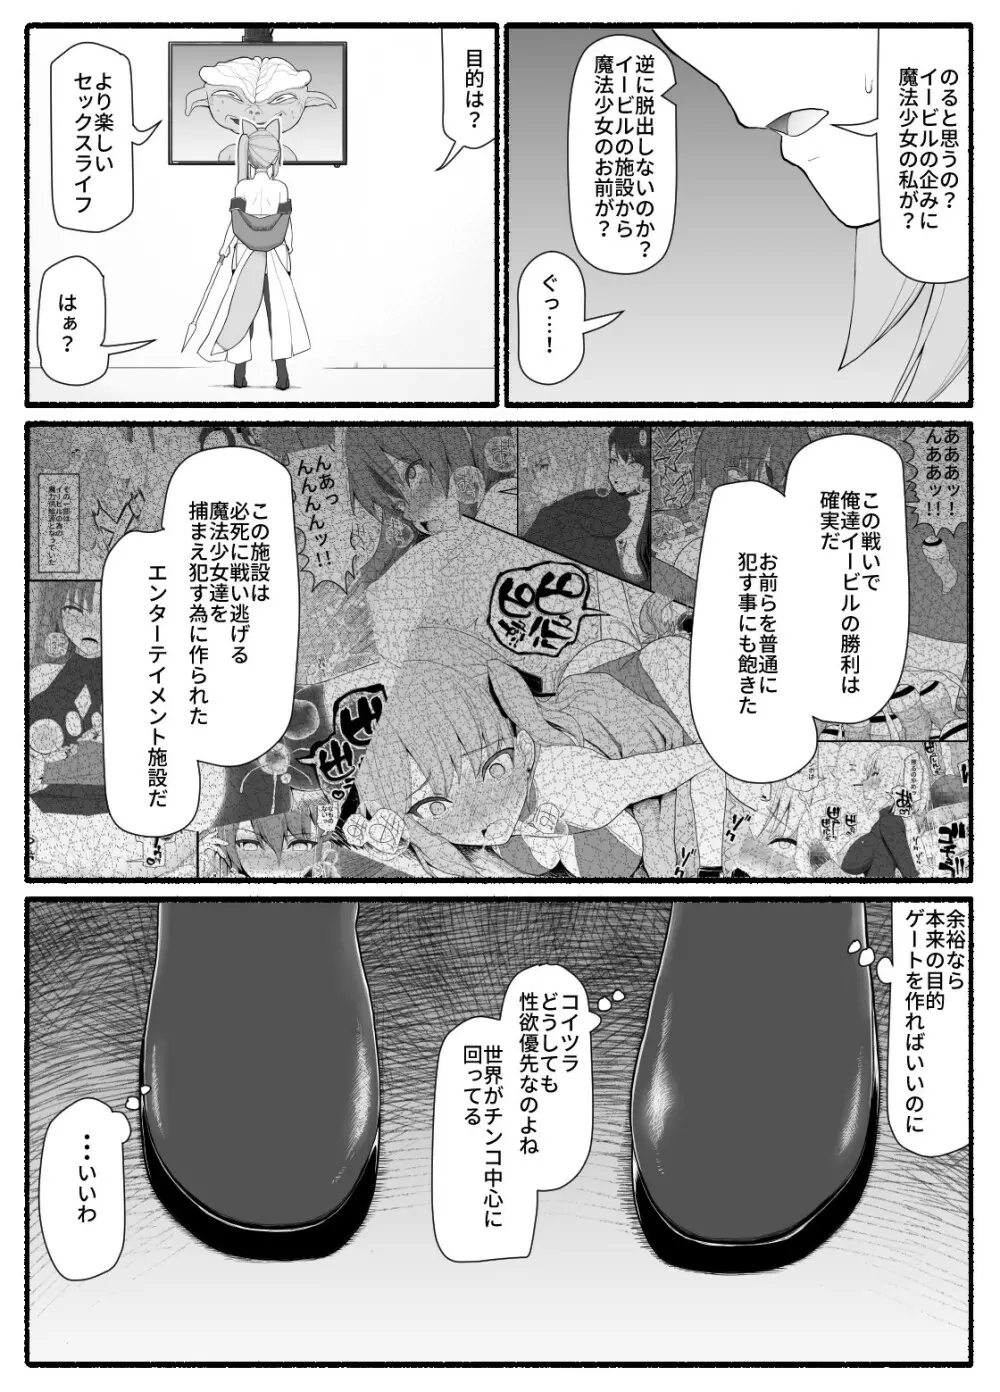 魔法少女vs淫魔生物 13 7ページ